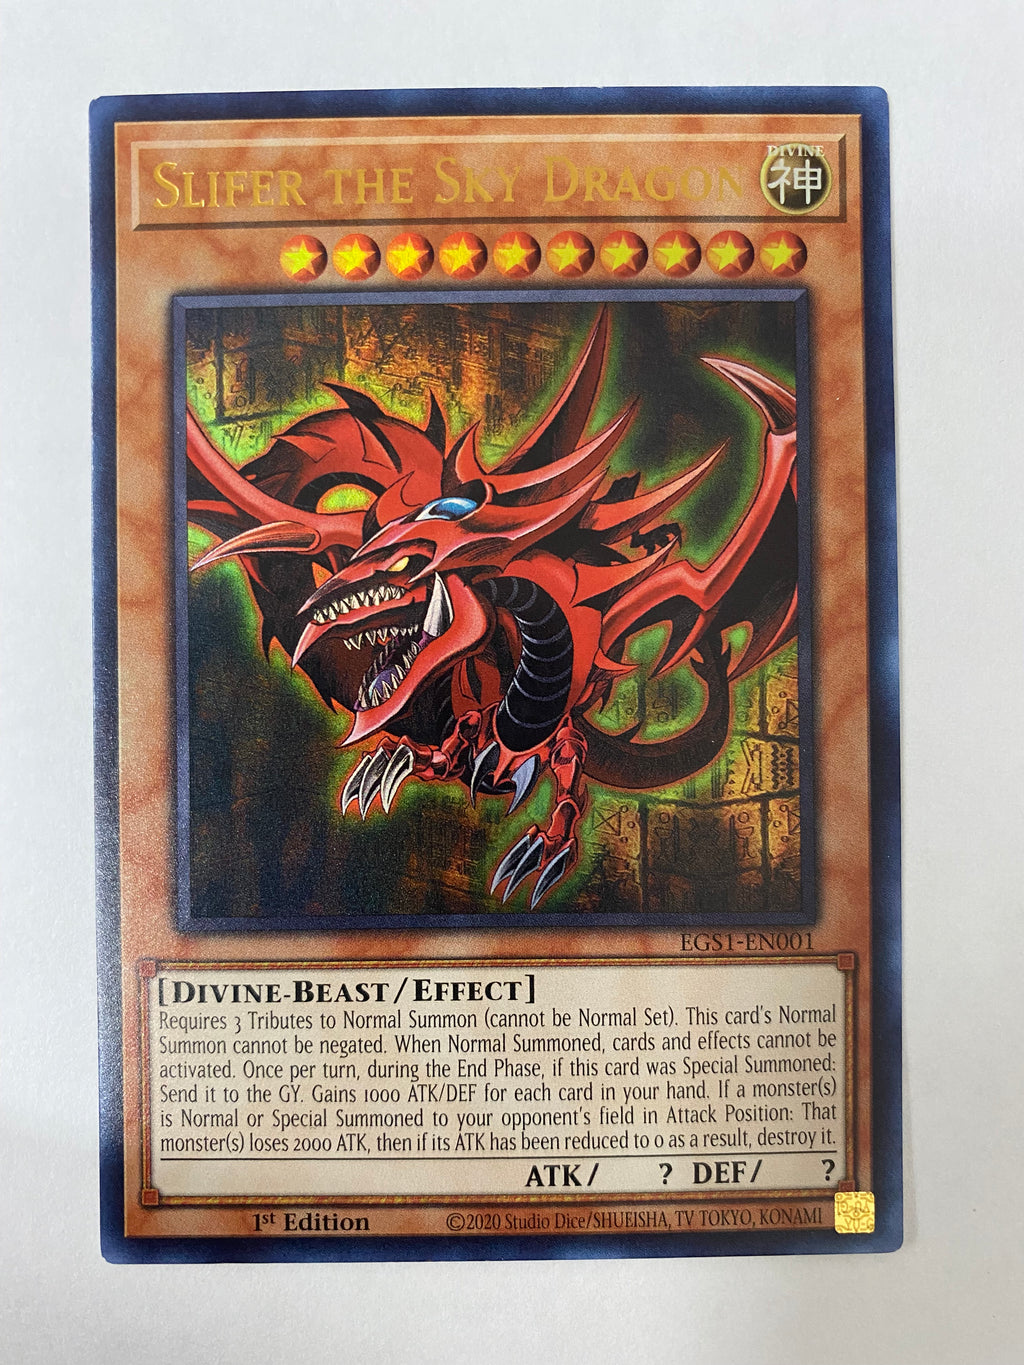 slifer the sky dragon card effect